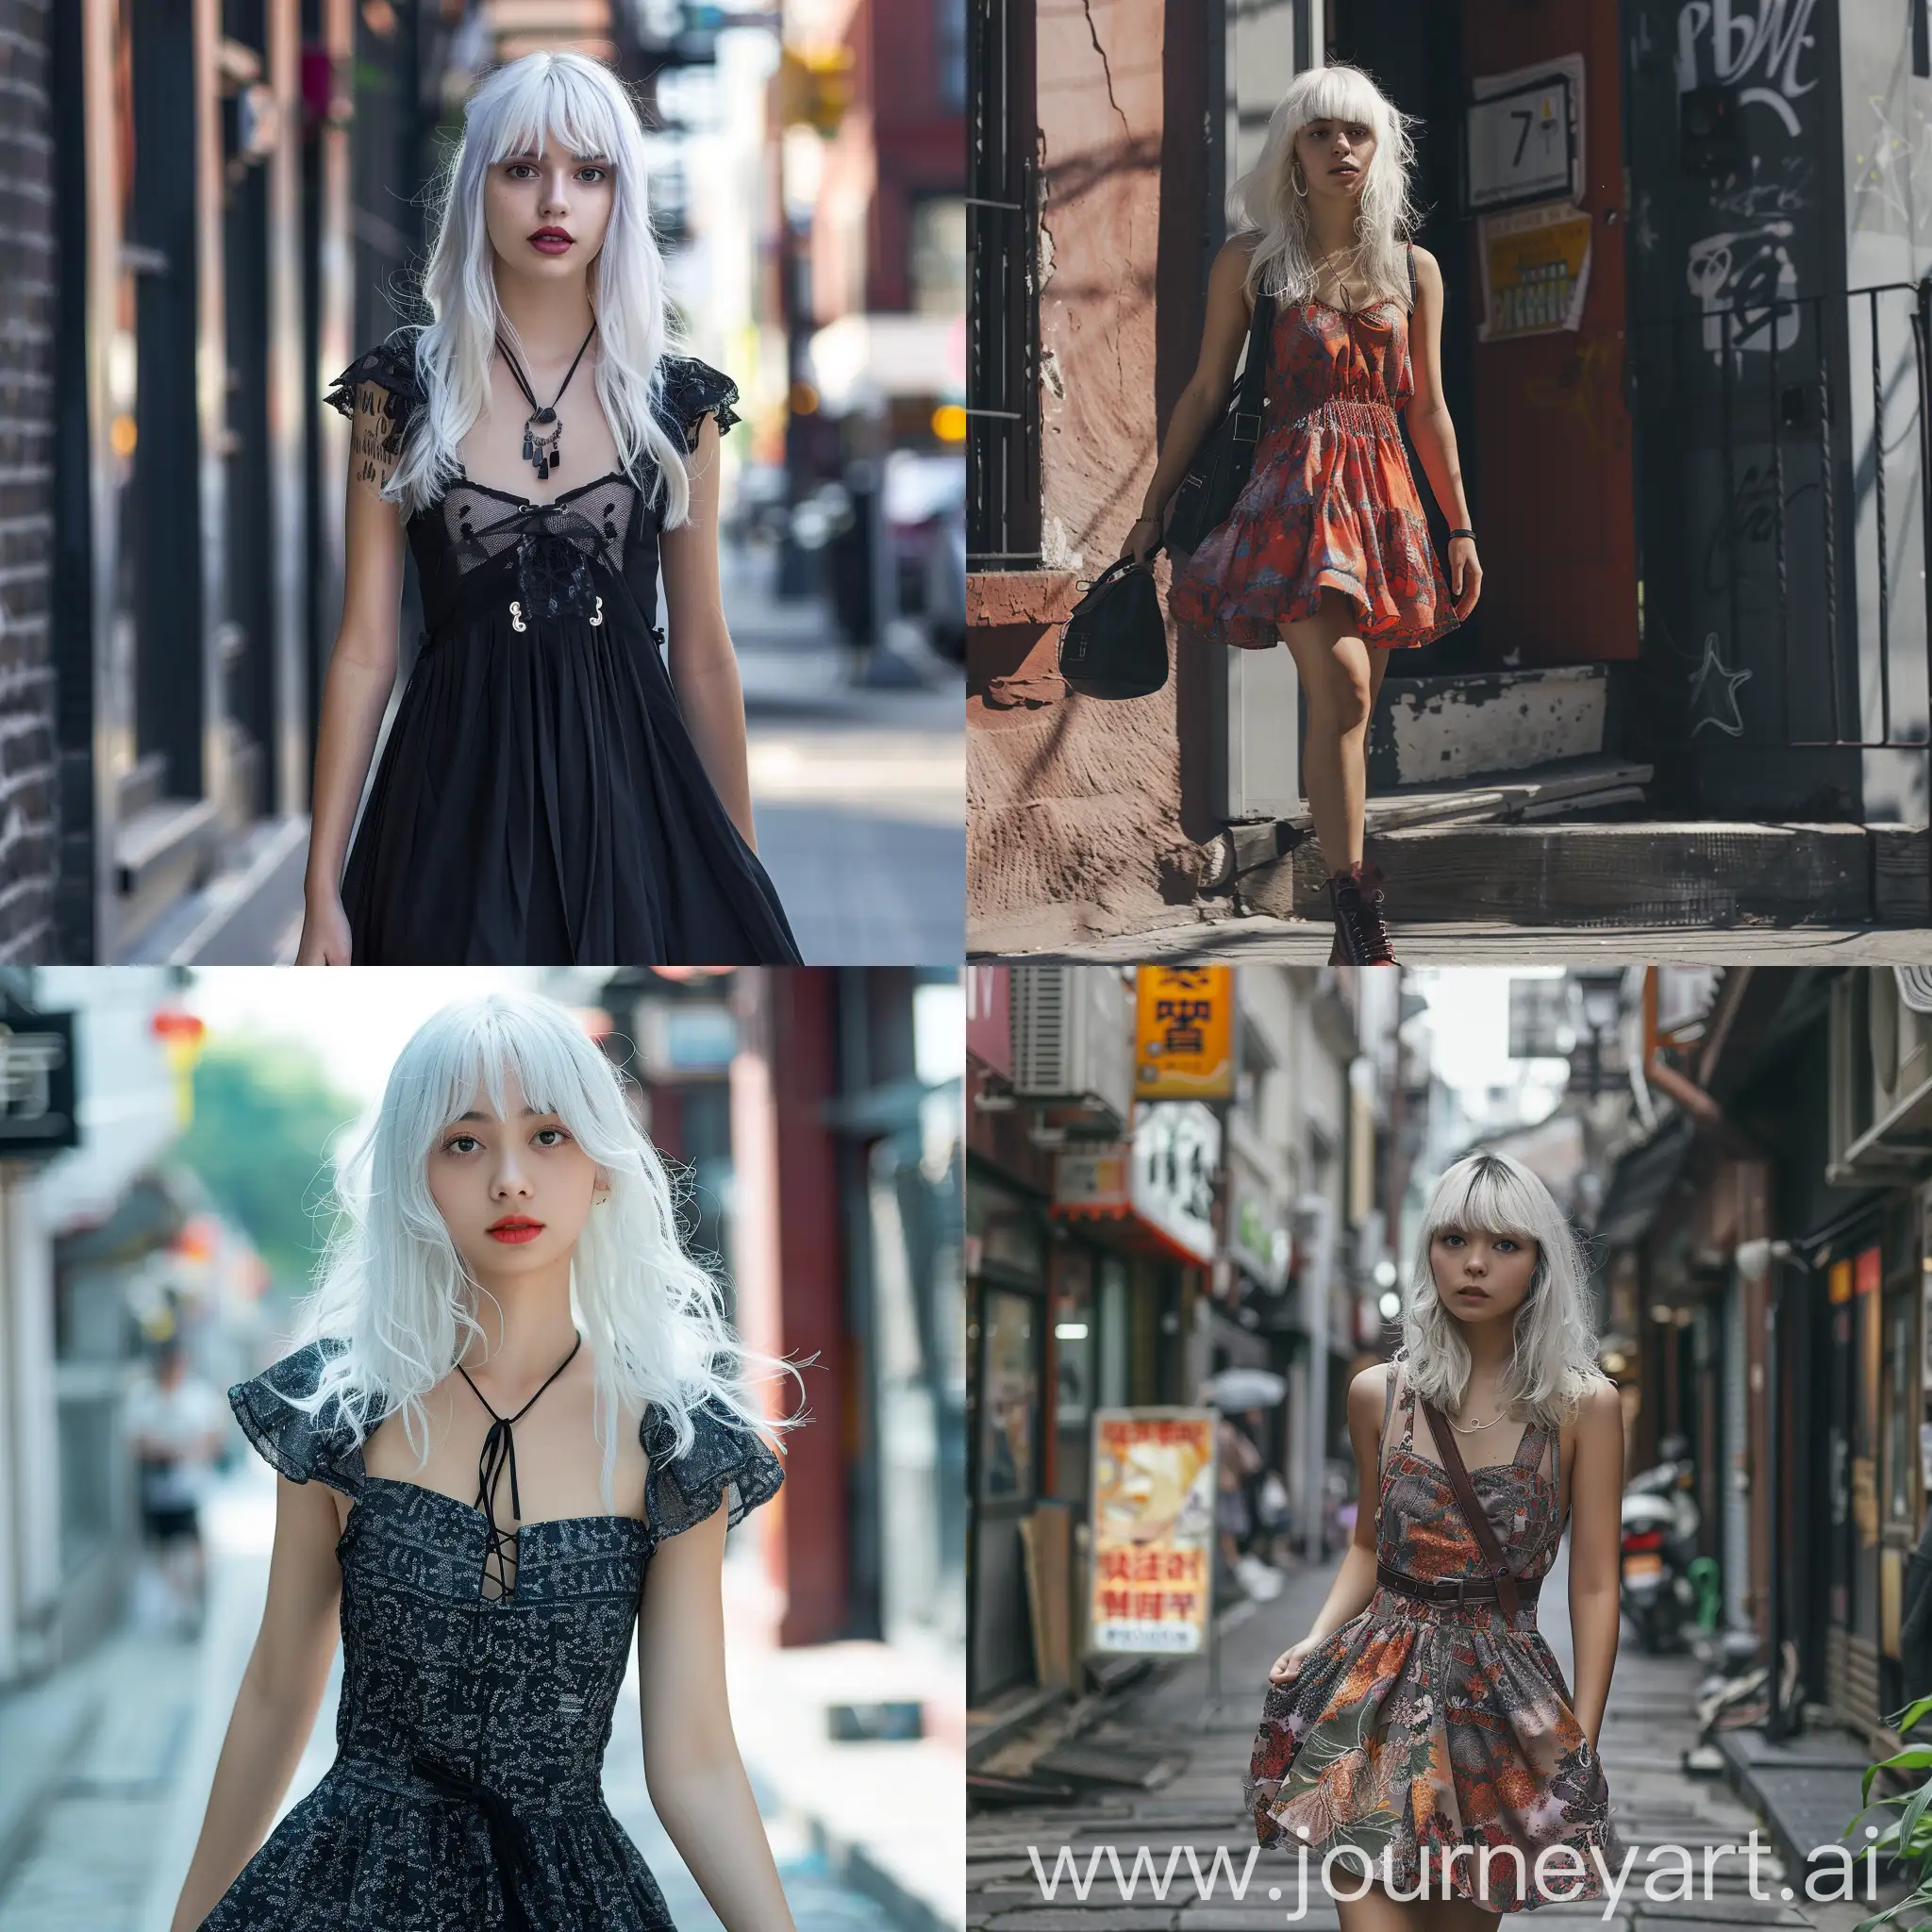 Elegant-Woman-Strolling-Down-City-Streets-in-White-Dress